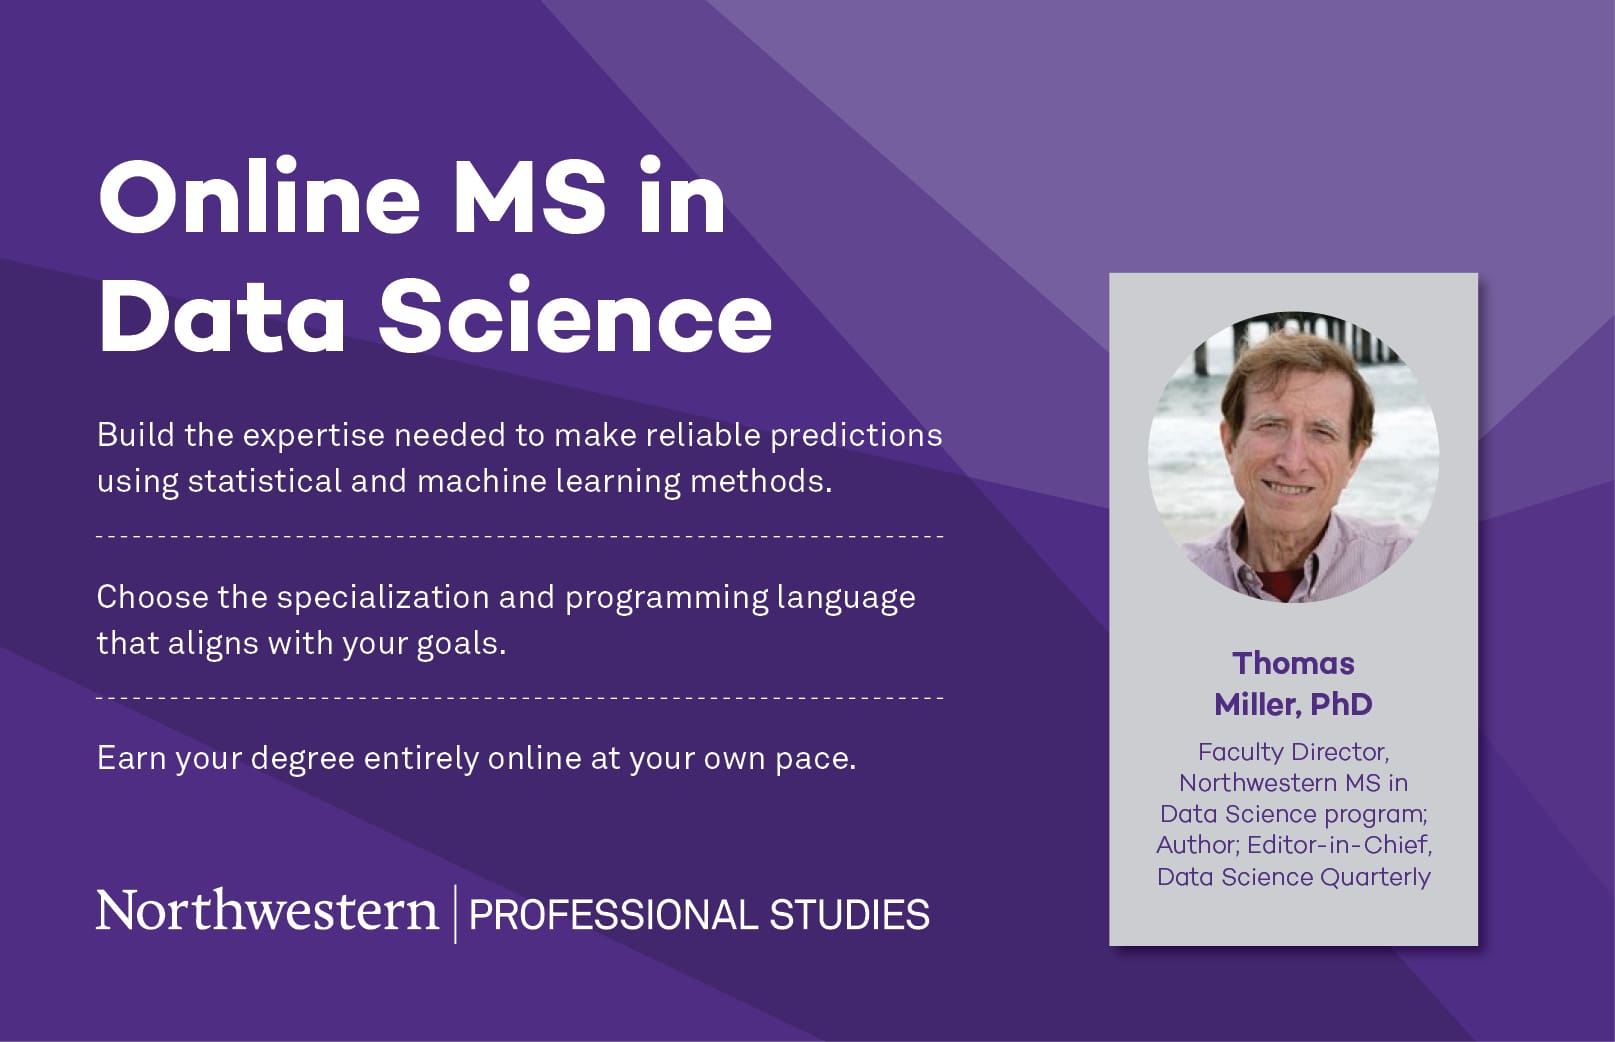 Thomas Miller, PhD, explores Northwestern University’s Online Graduate Programs in Data Science